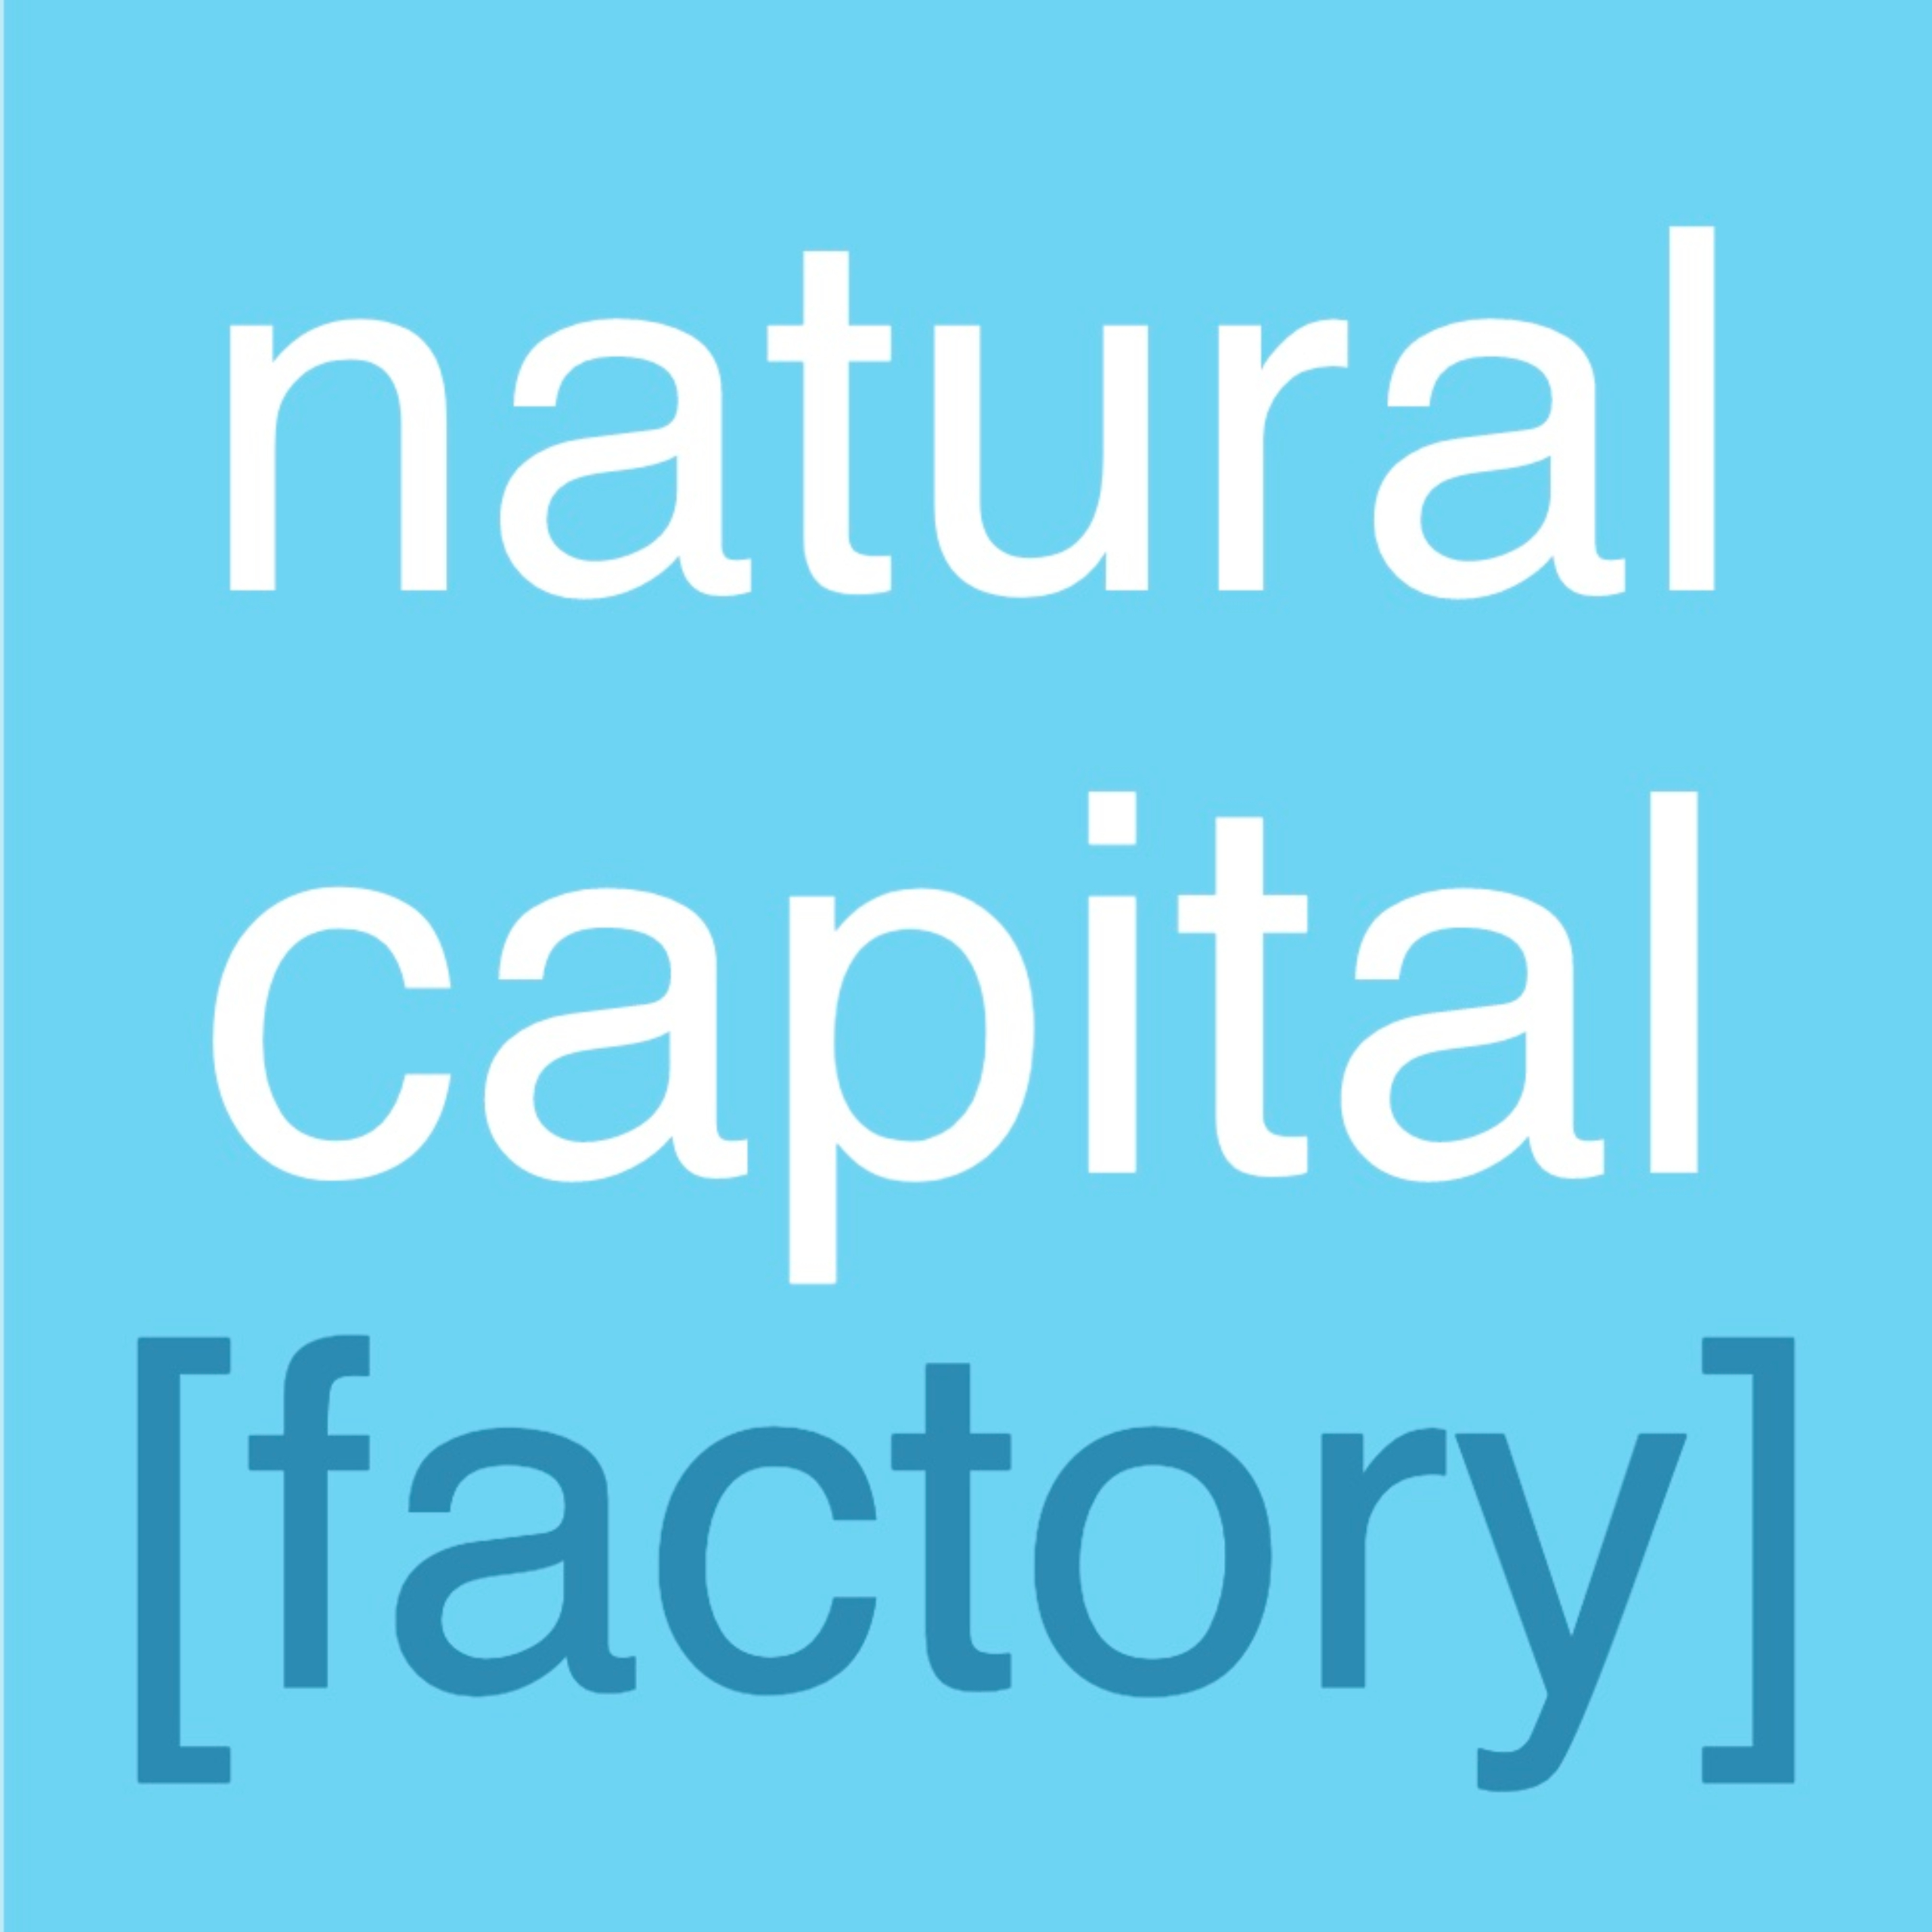 natural capital factory logo